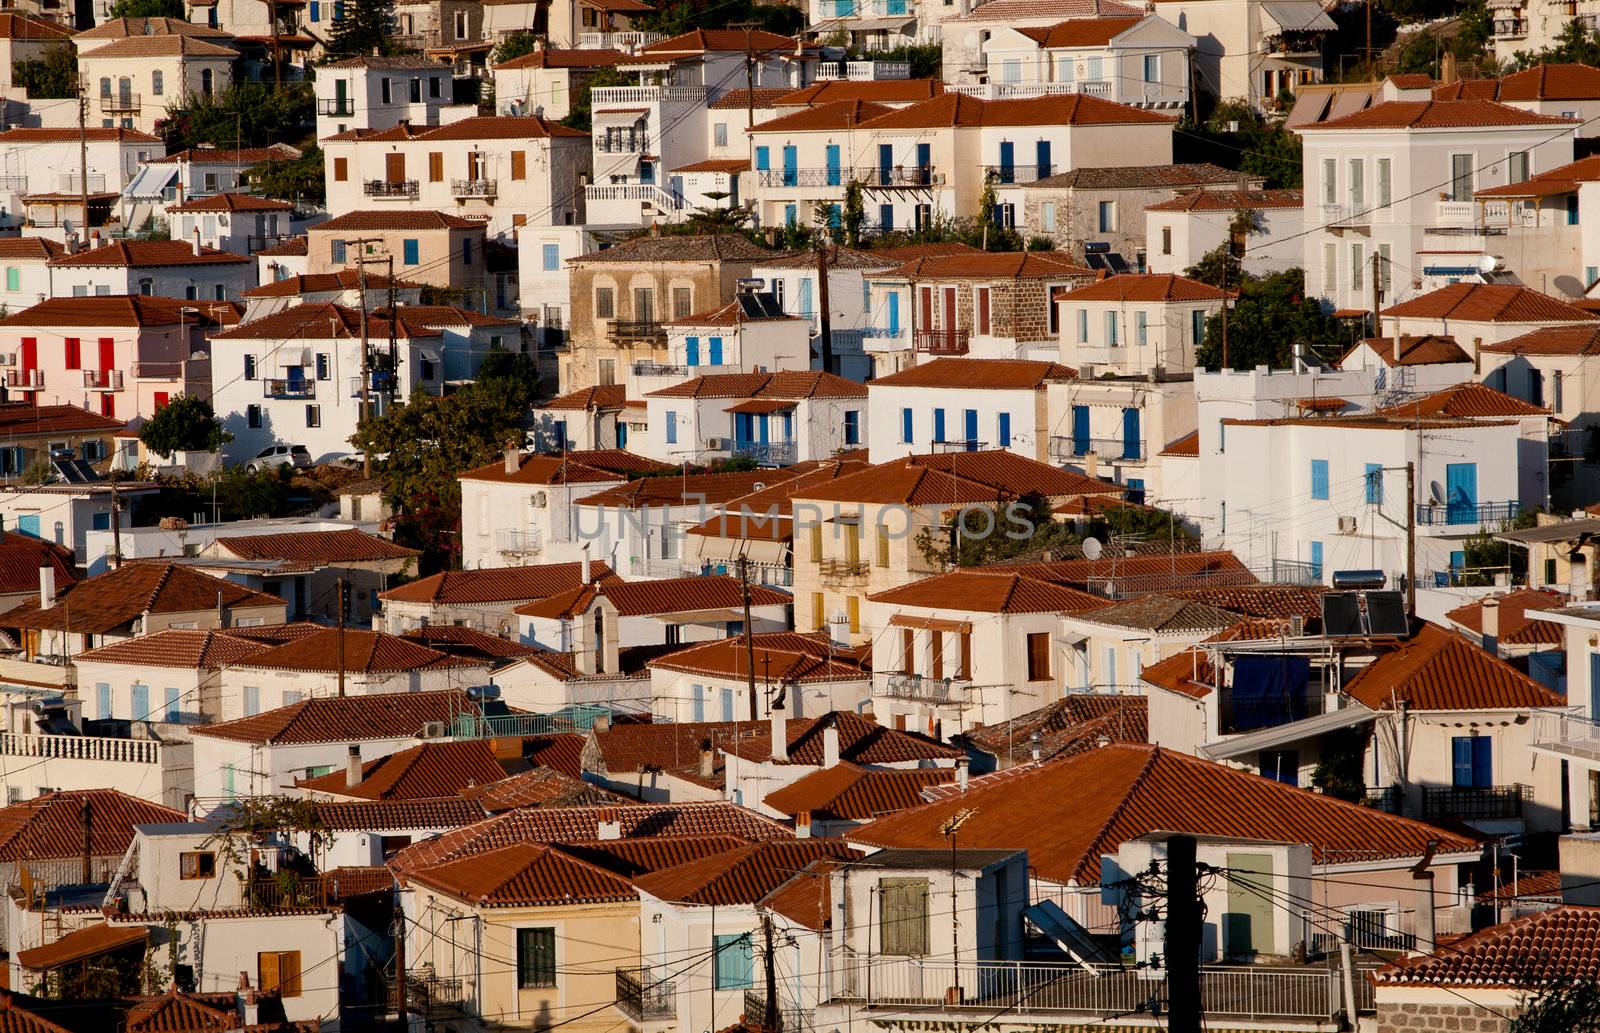 View of vilage in Poros island, Greece by vilevi